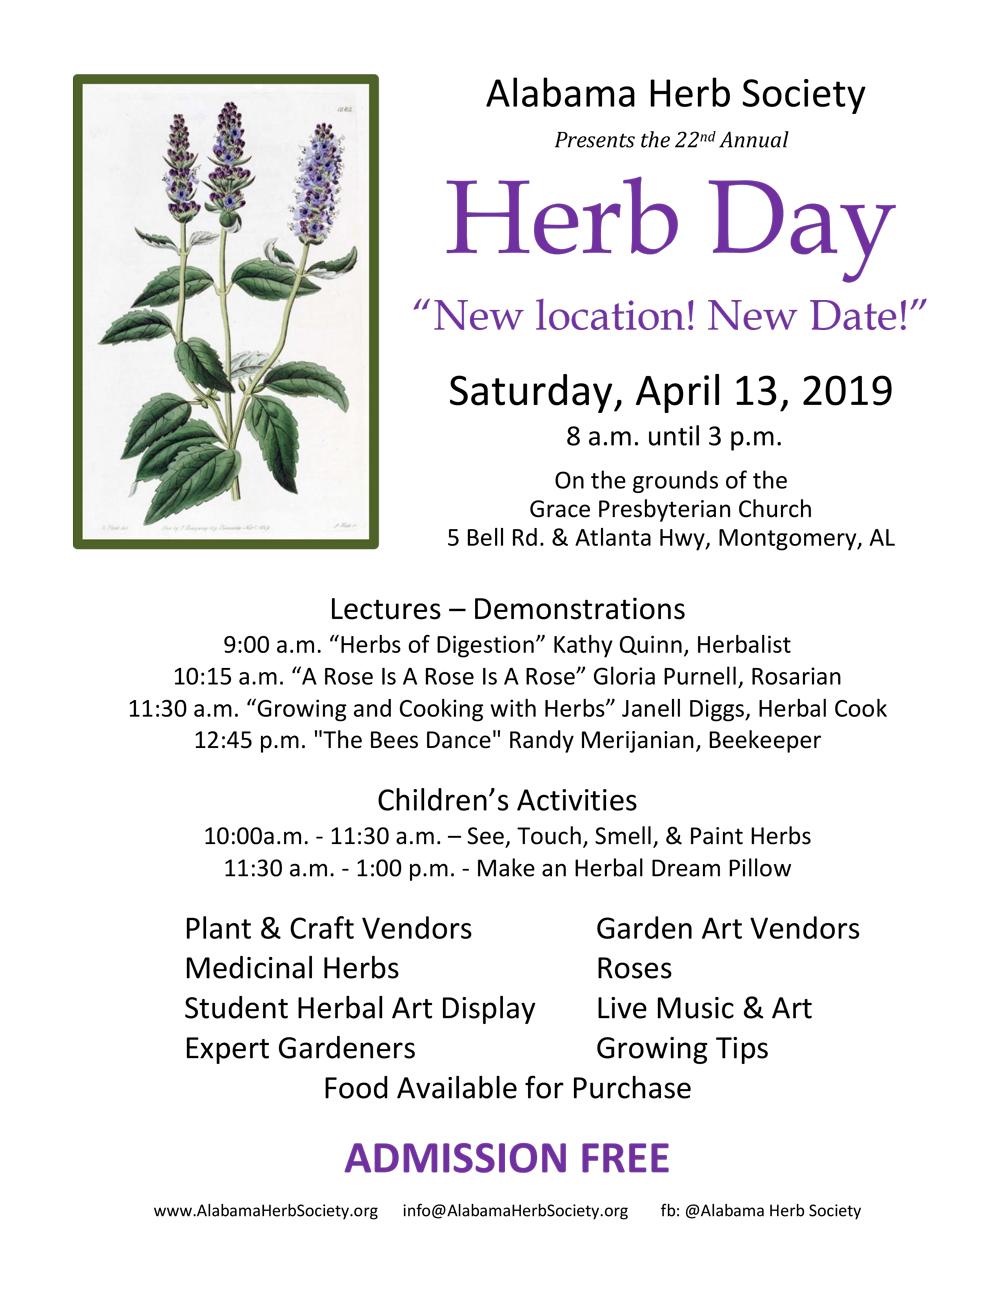 Herb Day 2019 Flyer